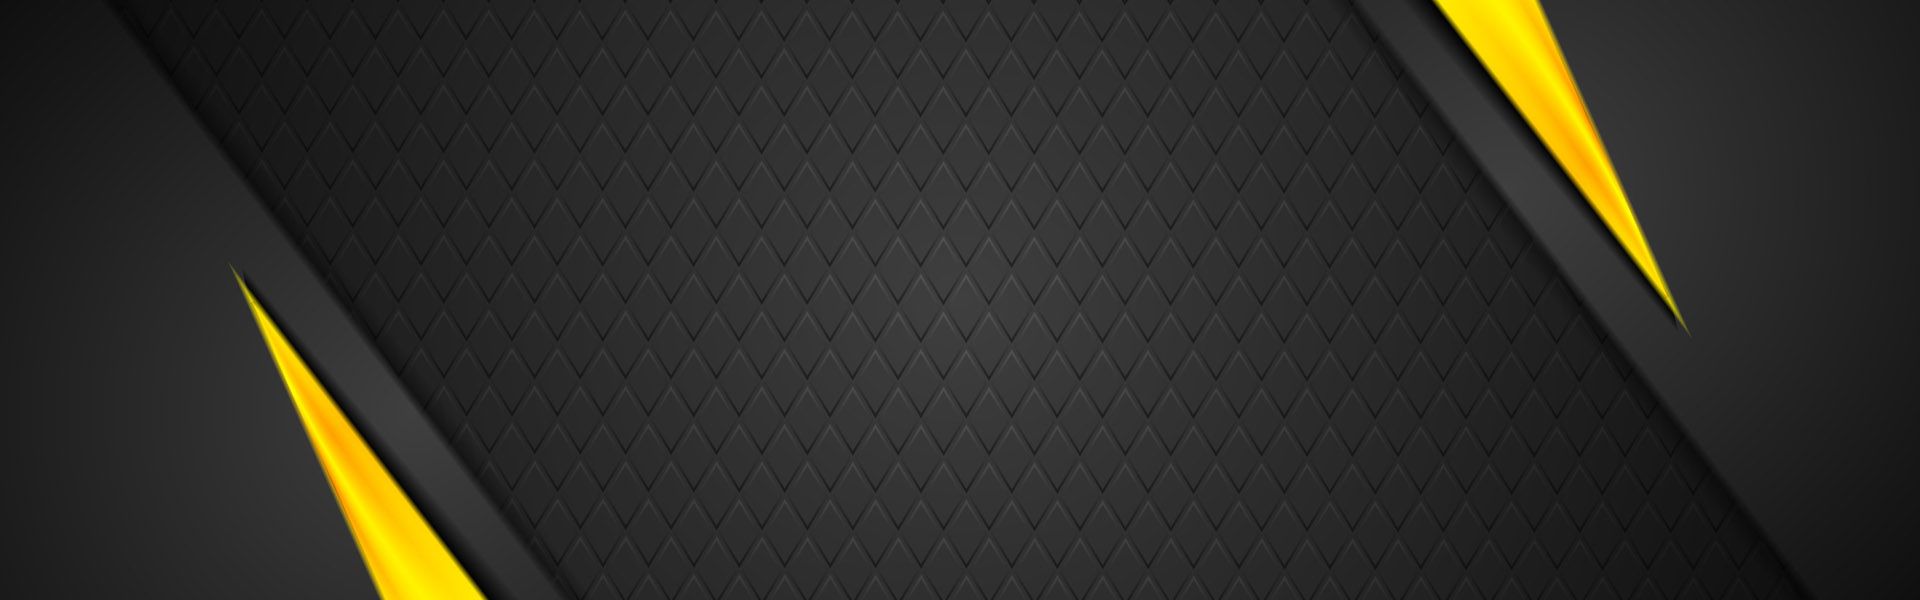 Free download Black Geometric Pattern Background With image Geometric [1920x600] for your Desktop, Mobile & Tablet. Explore Metal Geometric Wallpaper. Metal Geometric Wallpaper, Geometric Wallpaper, Wallpaper Metal